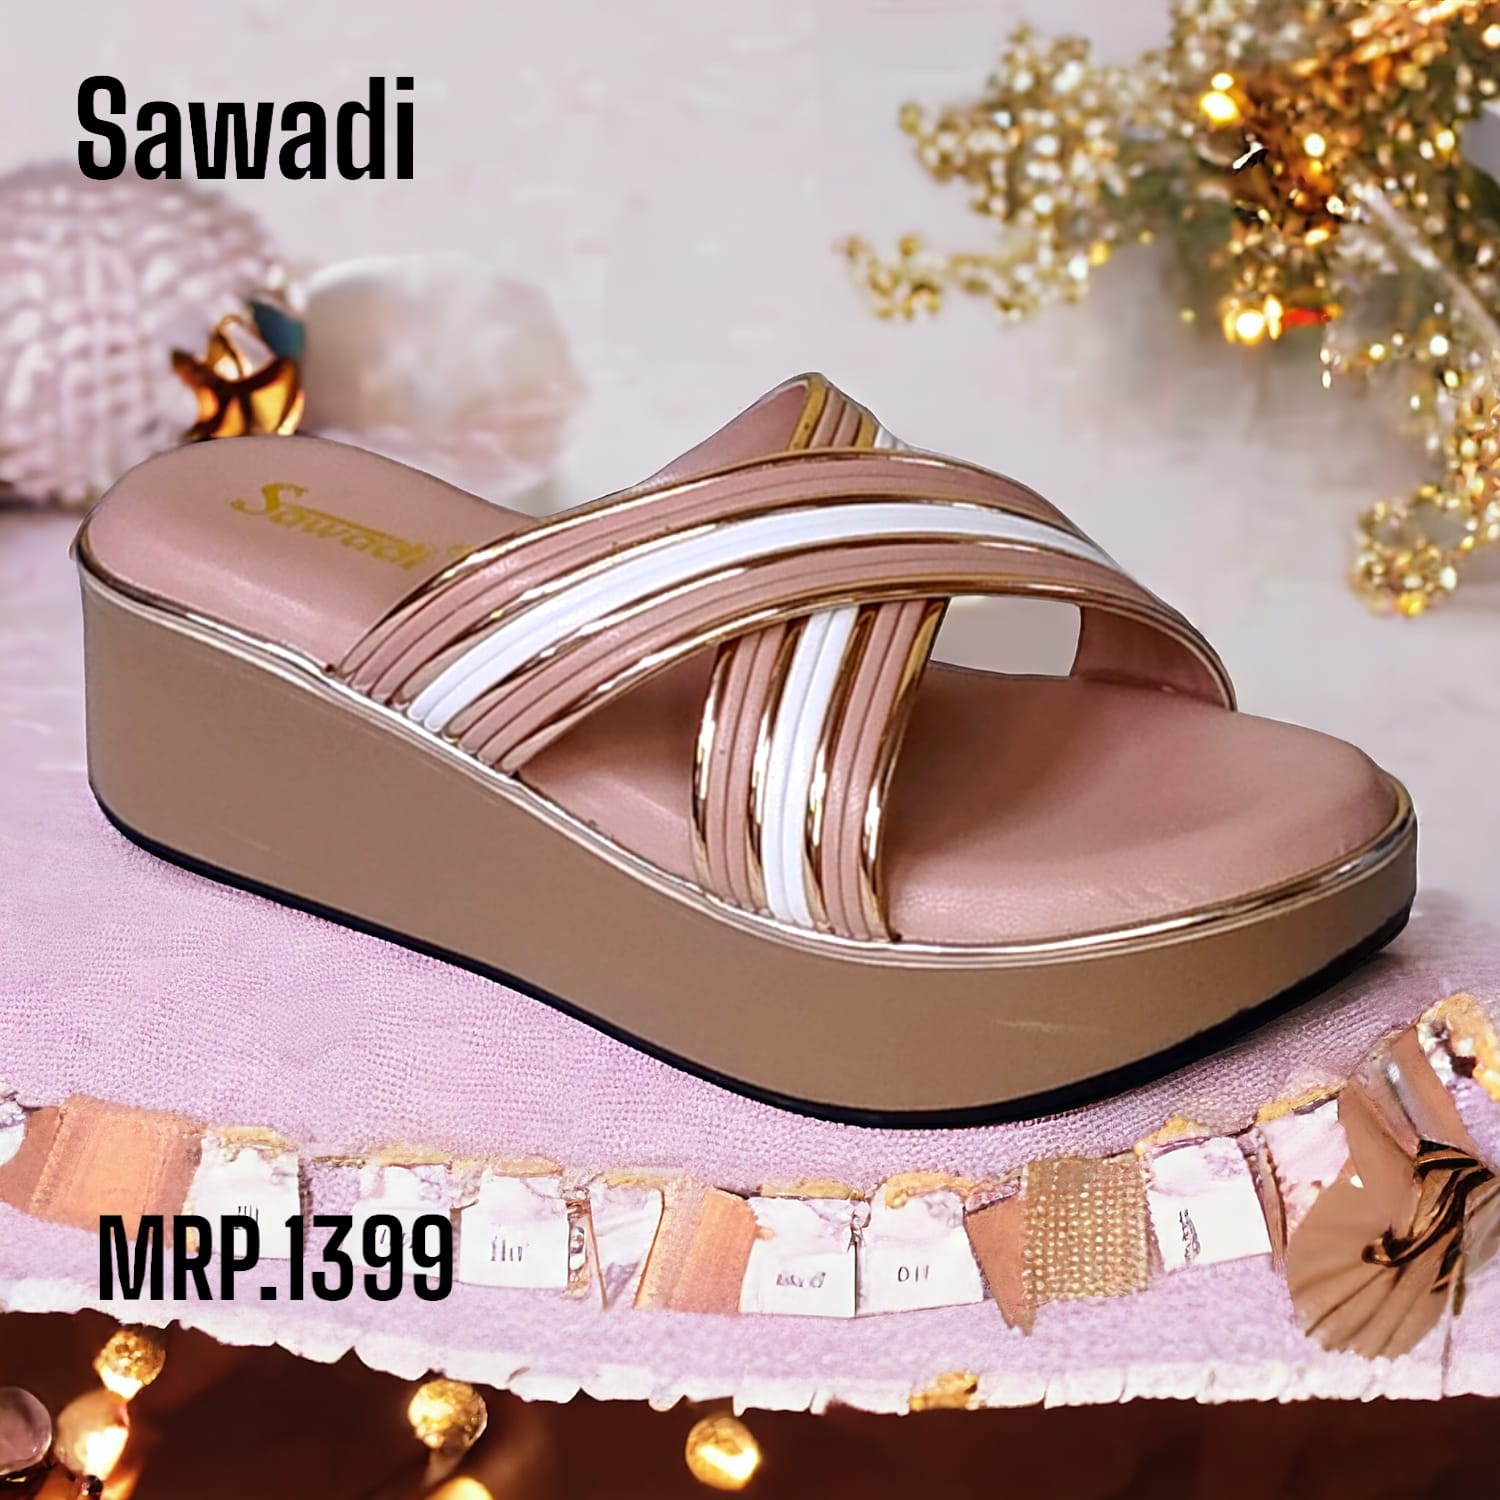 Sawadi Women Casuals Heel chappals